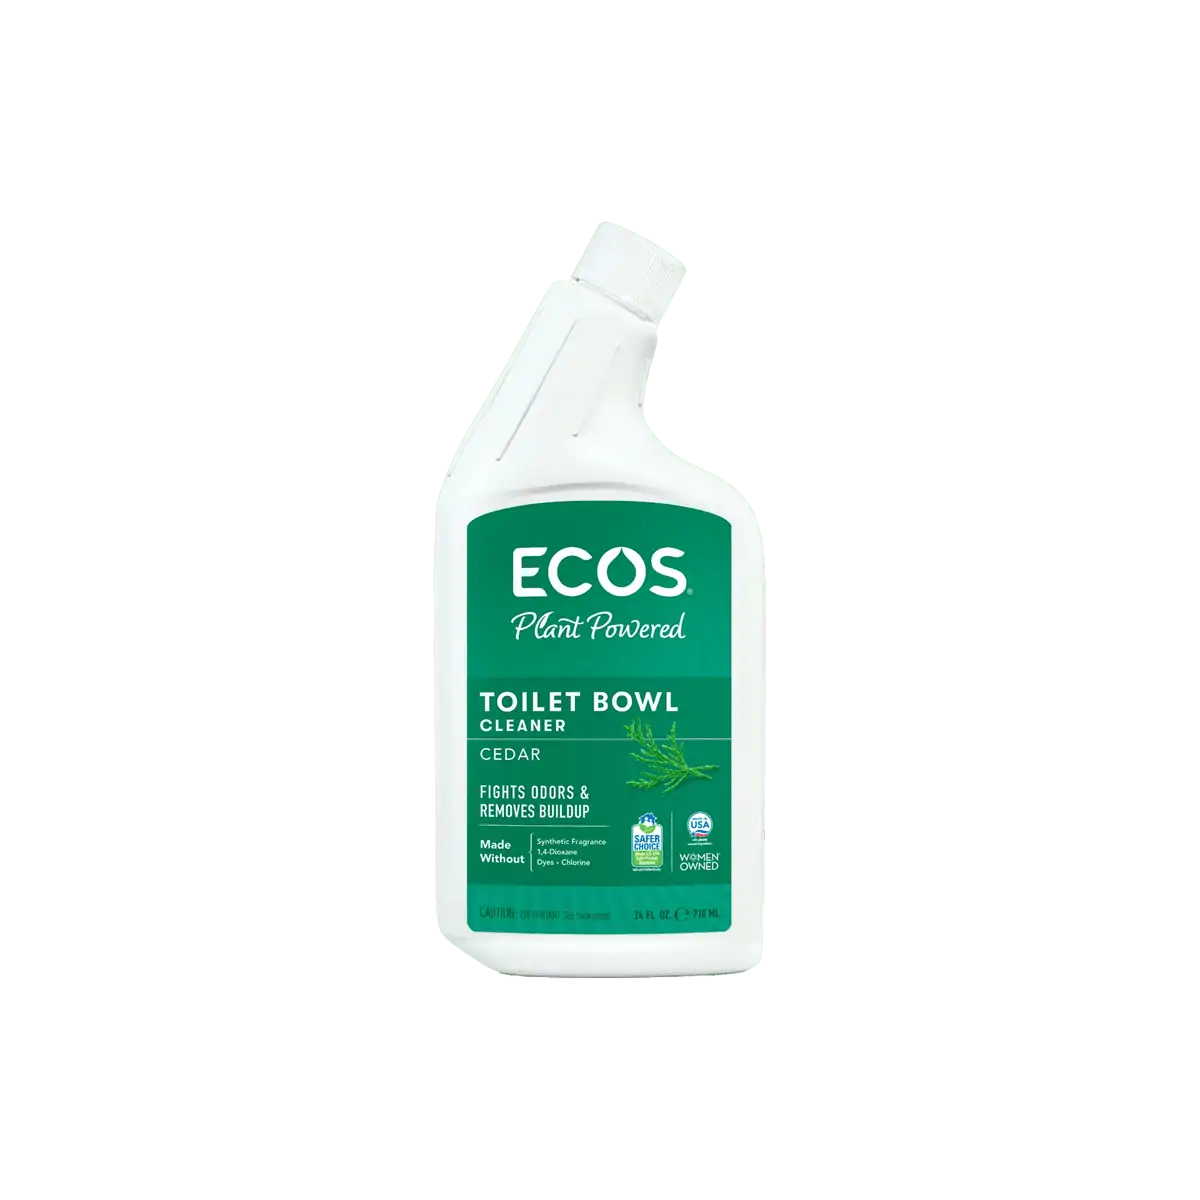 ECOS Toilet Bowl Cleaner bottle